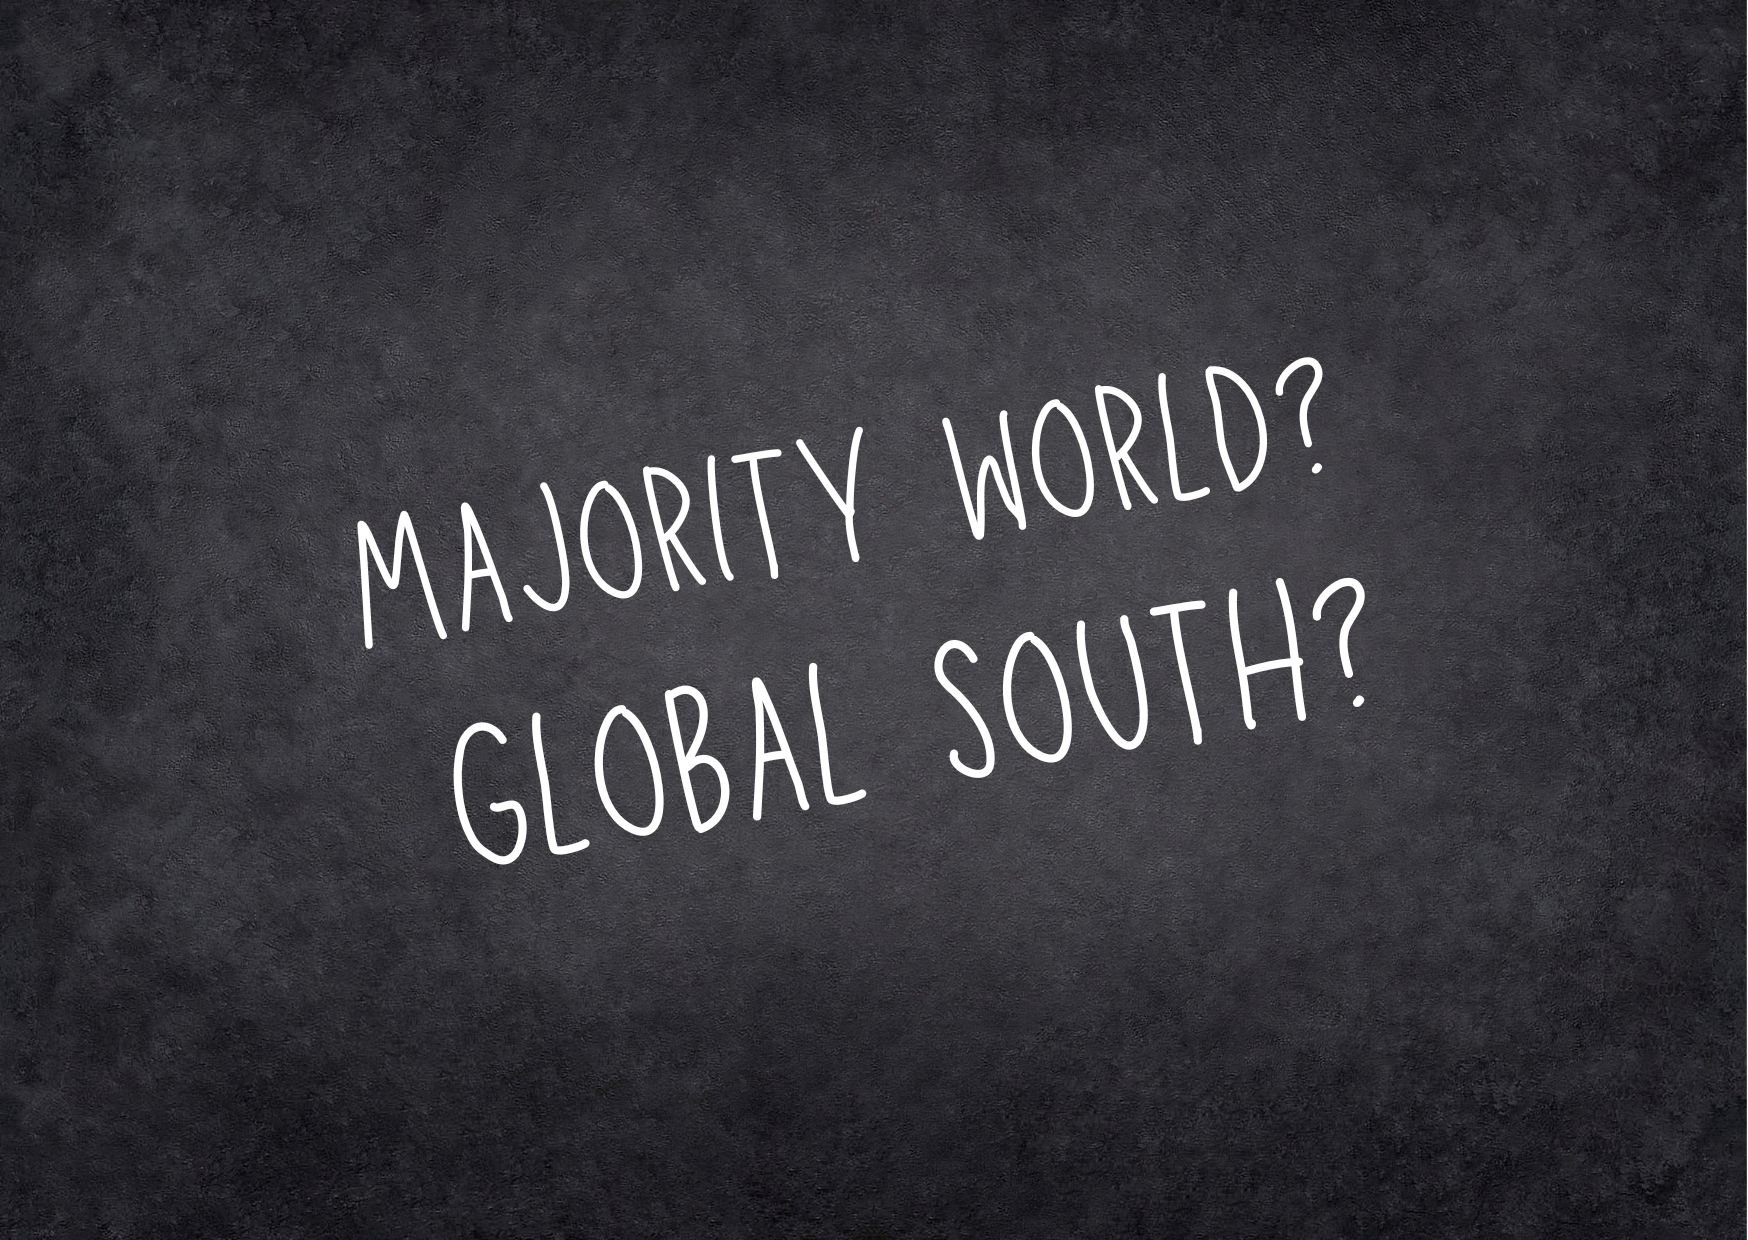 Majority world Global South 	Majority world Global South